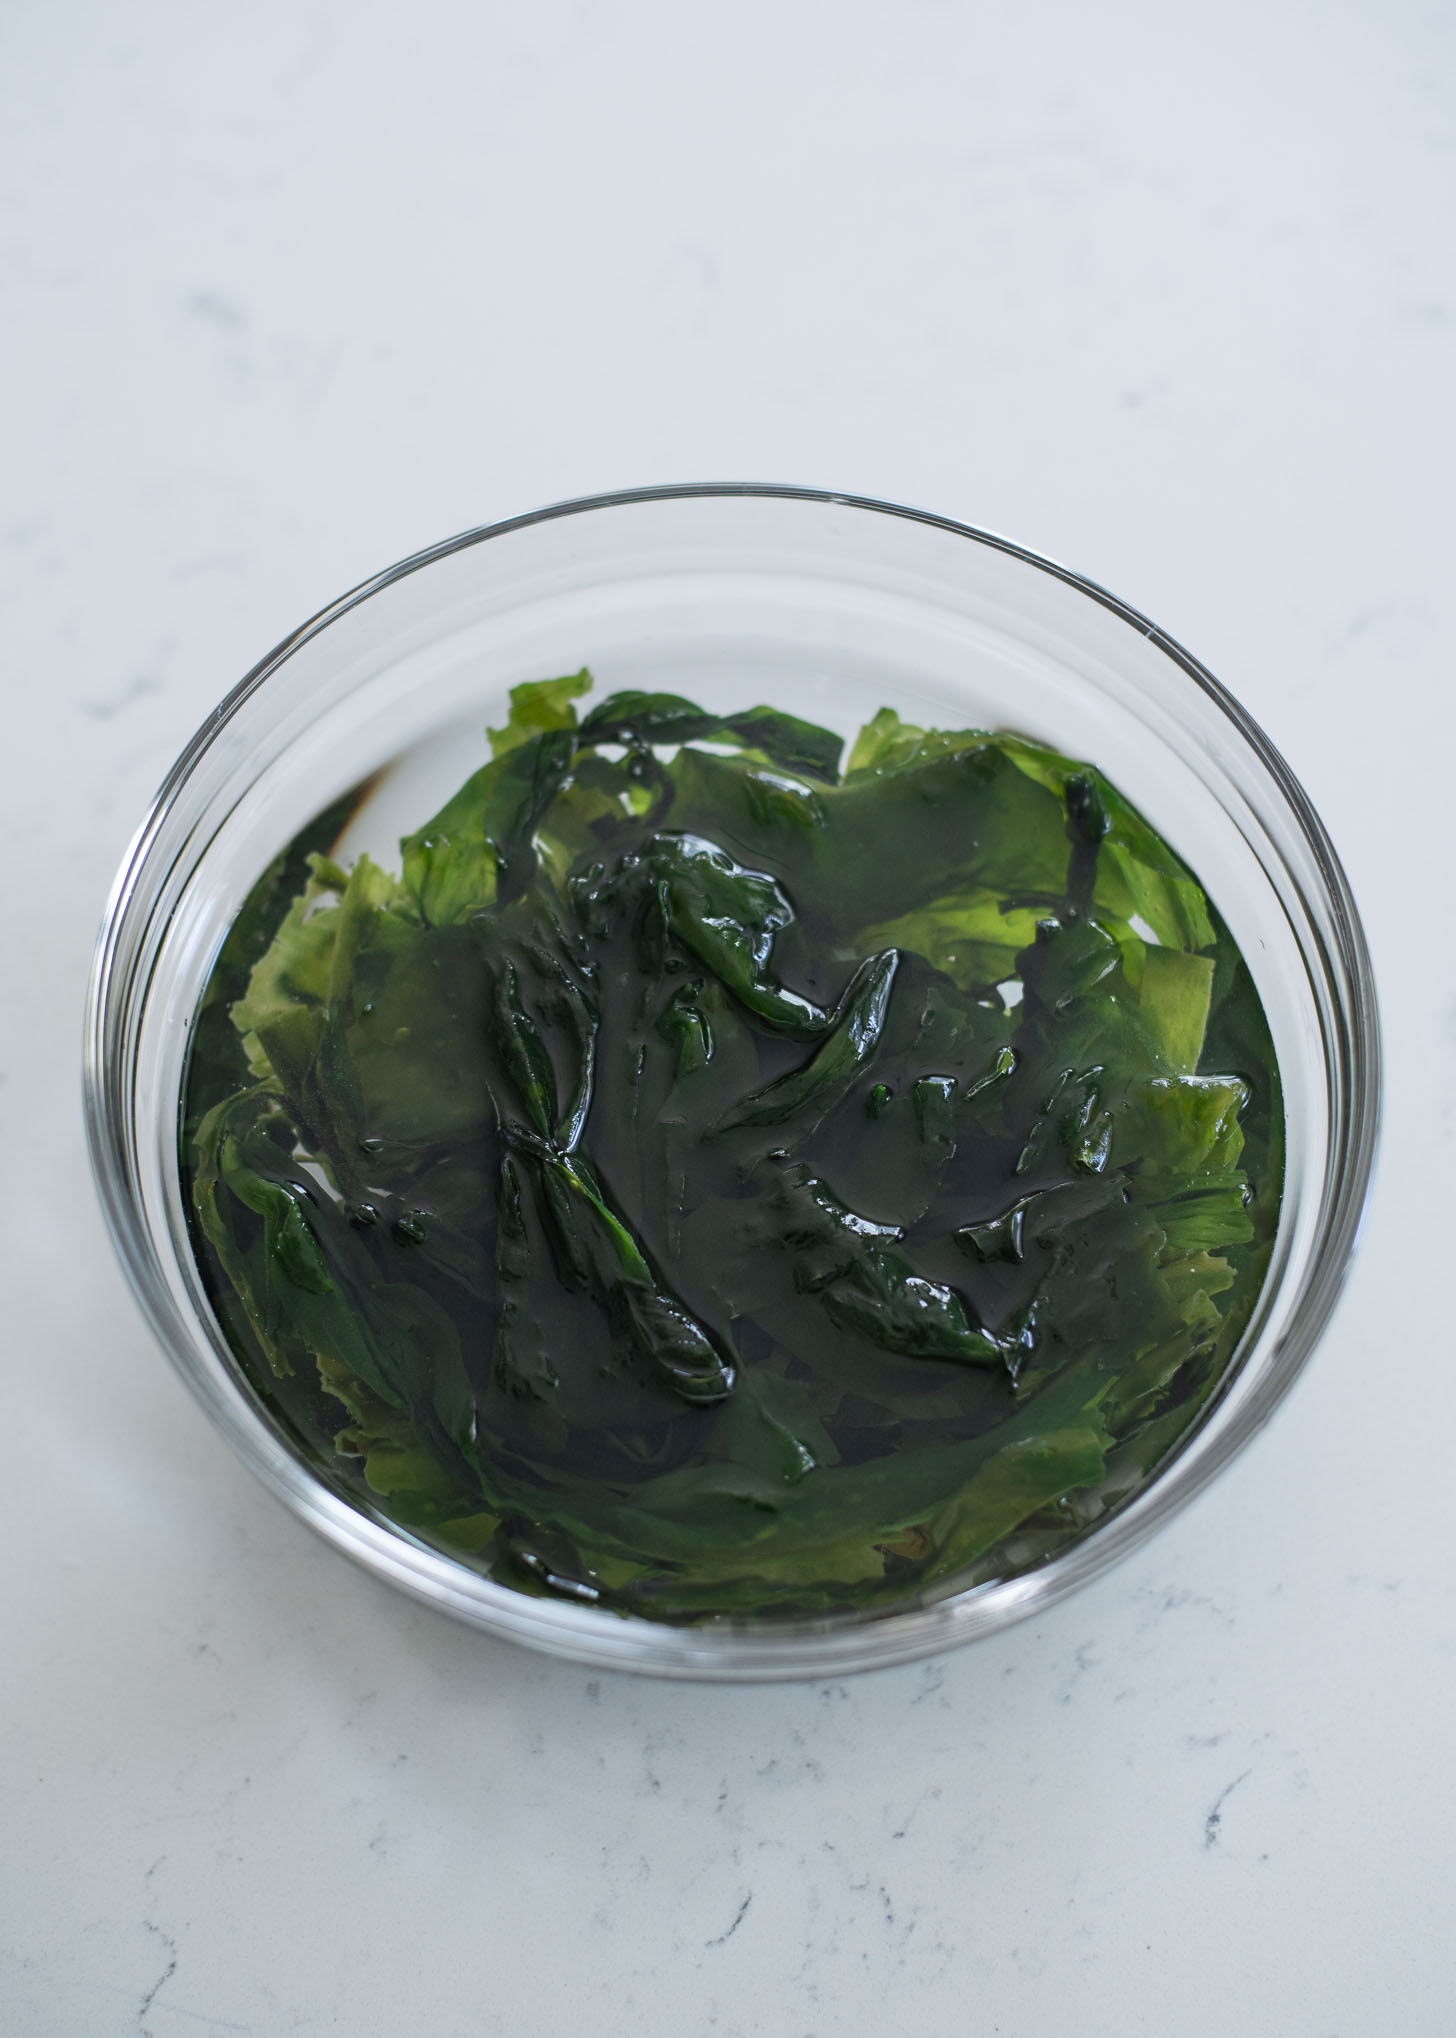 Dried seaweed is rehydrated in water increasing its volume.